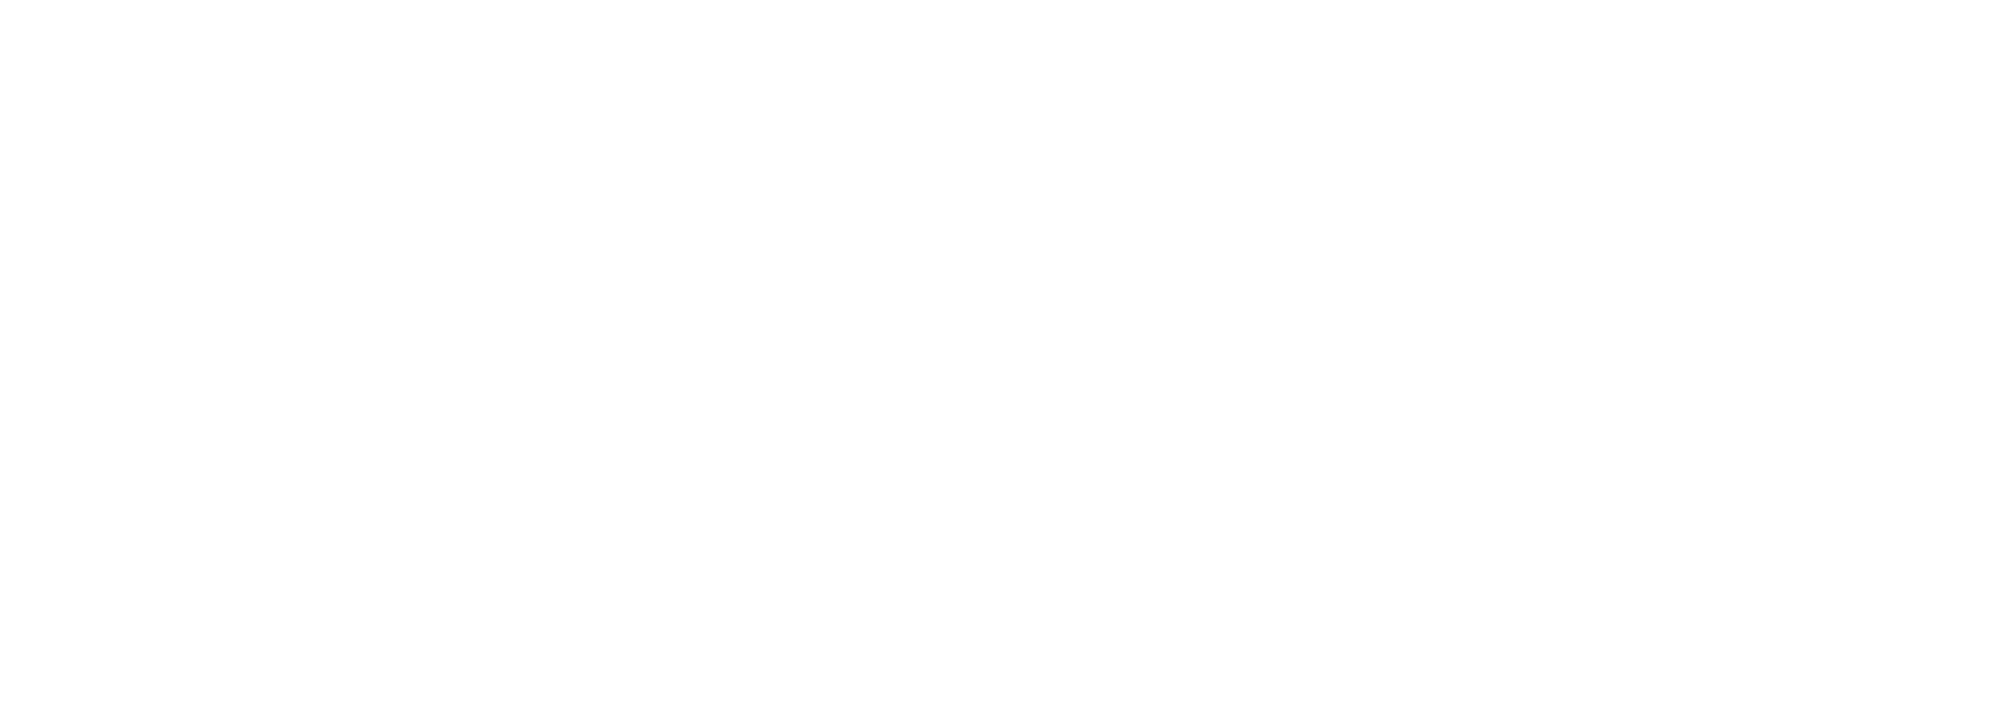 Festiwal muzyczny BrokenMusic